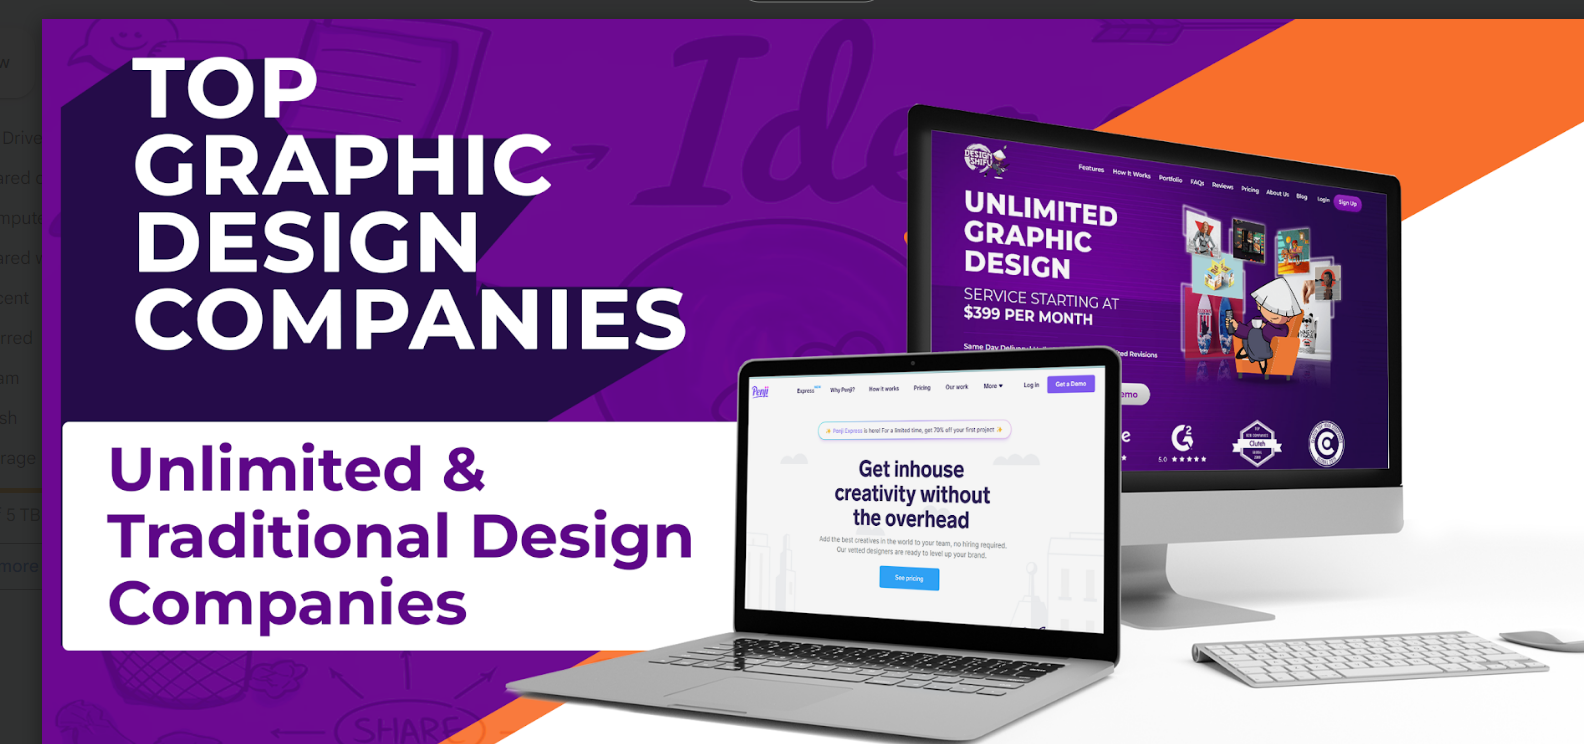 Top graphic design companies